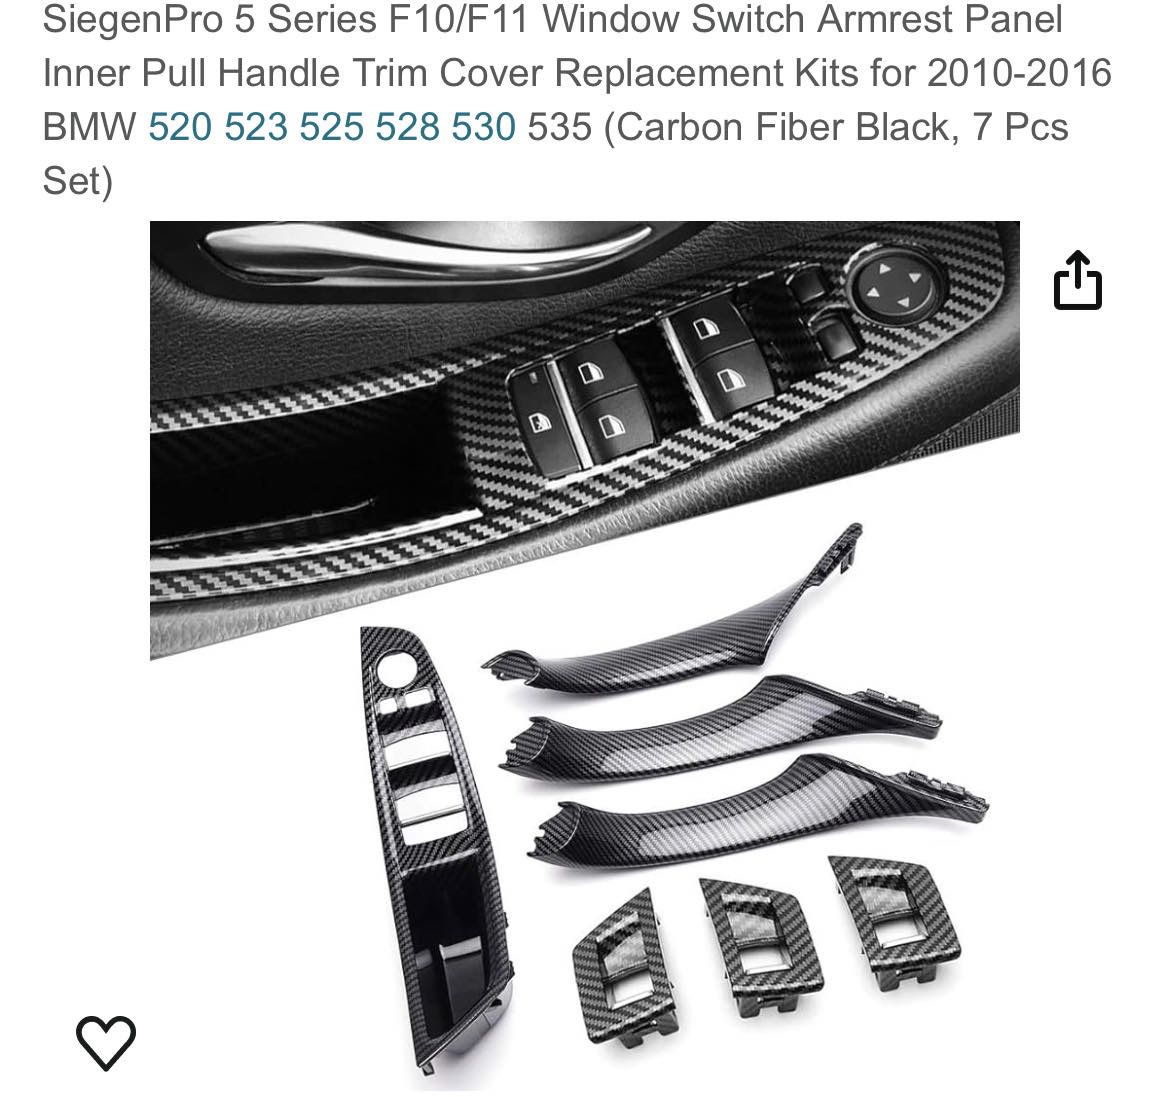 BMW Carbon Fiber Accessories-Window Switch Armrest Panel Replacement Kit